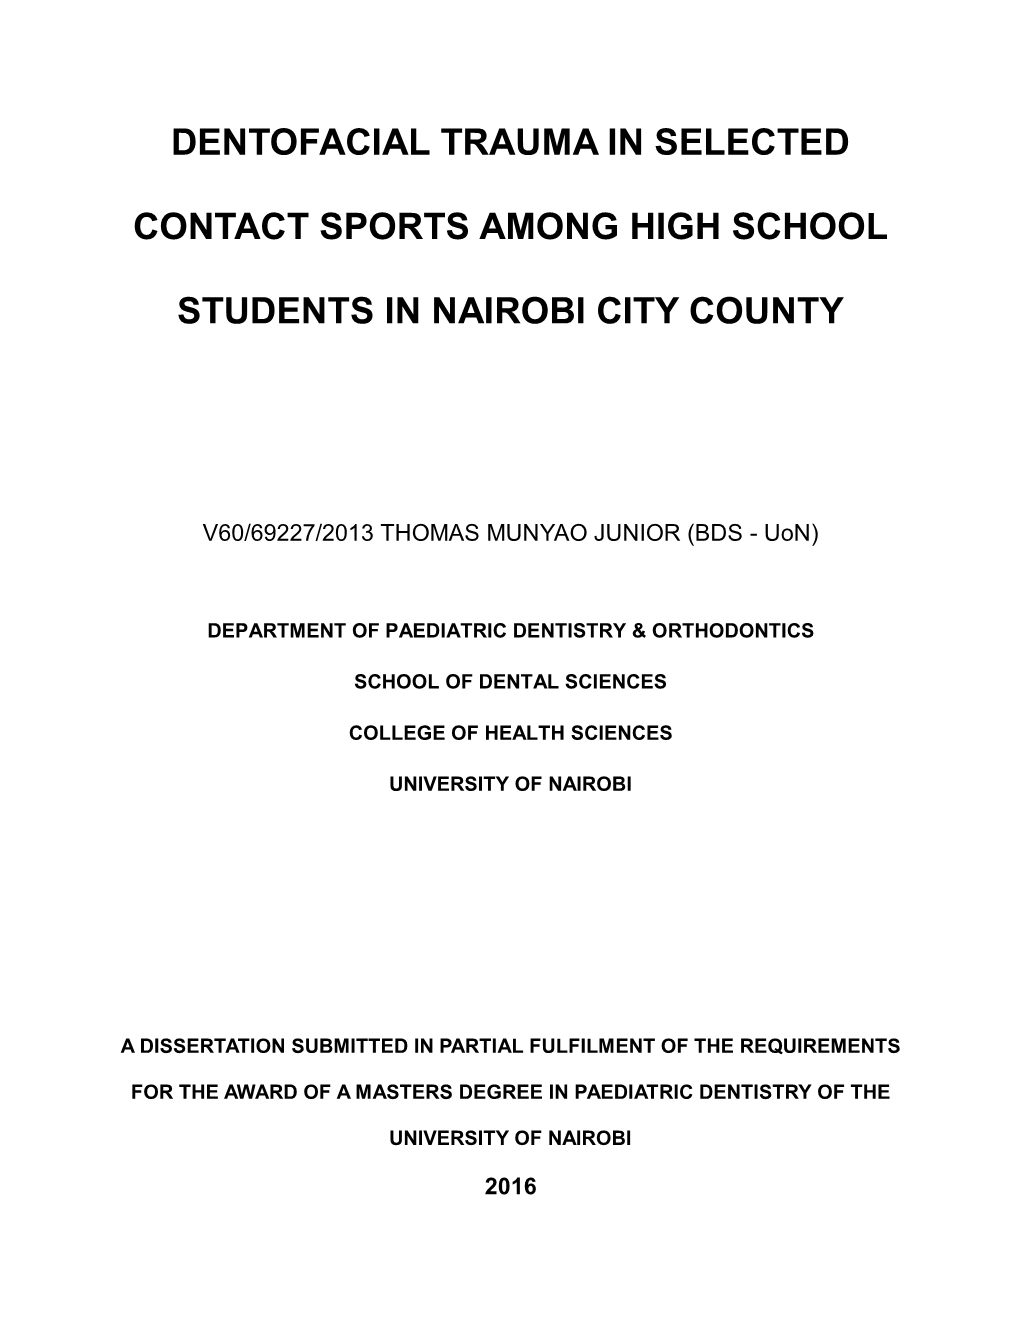 Dentofacial Trauma in Selected Contact Sports Among High School Students in Nairobi City County